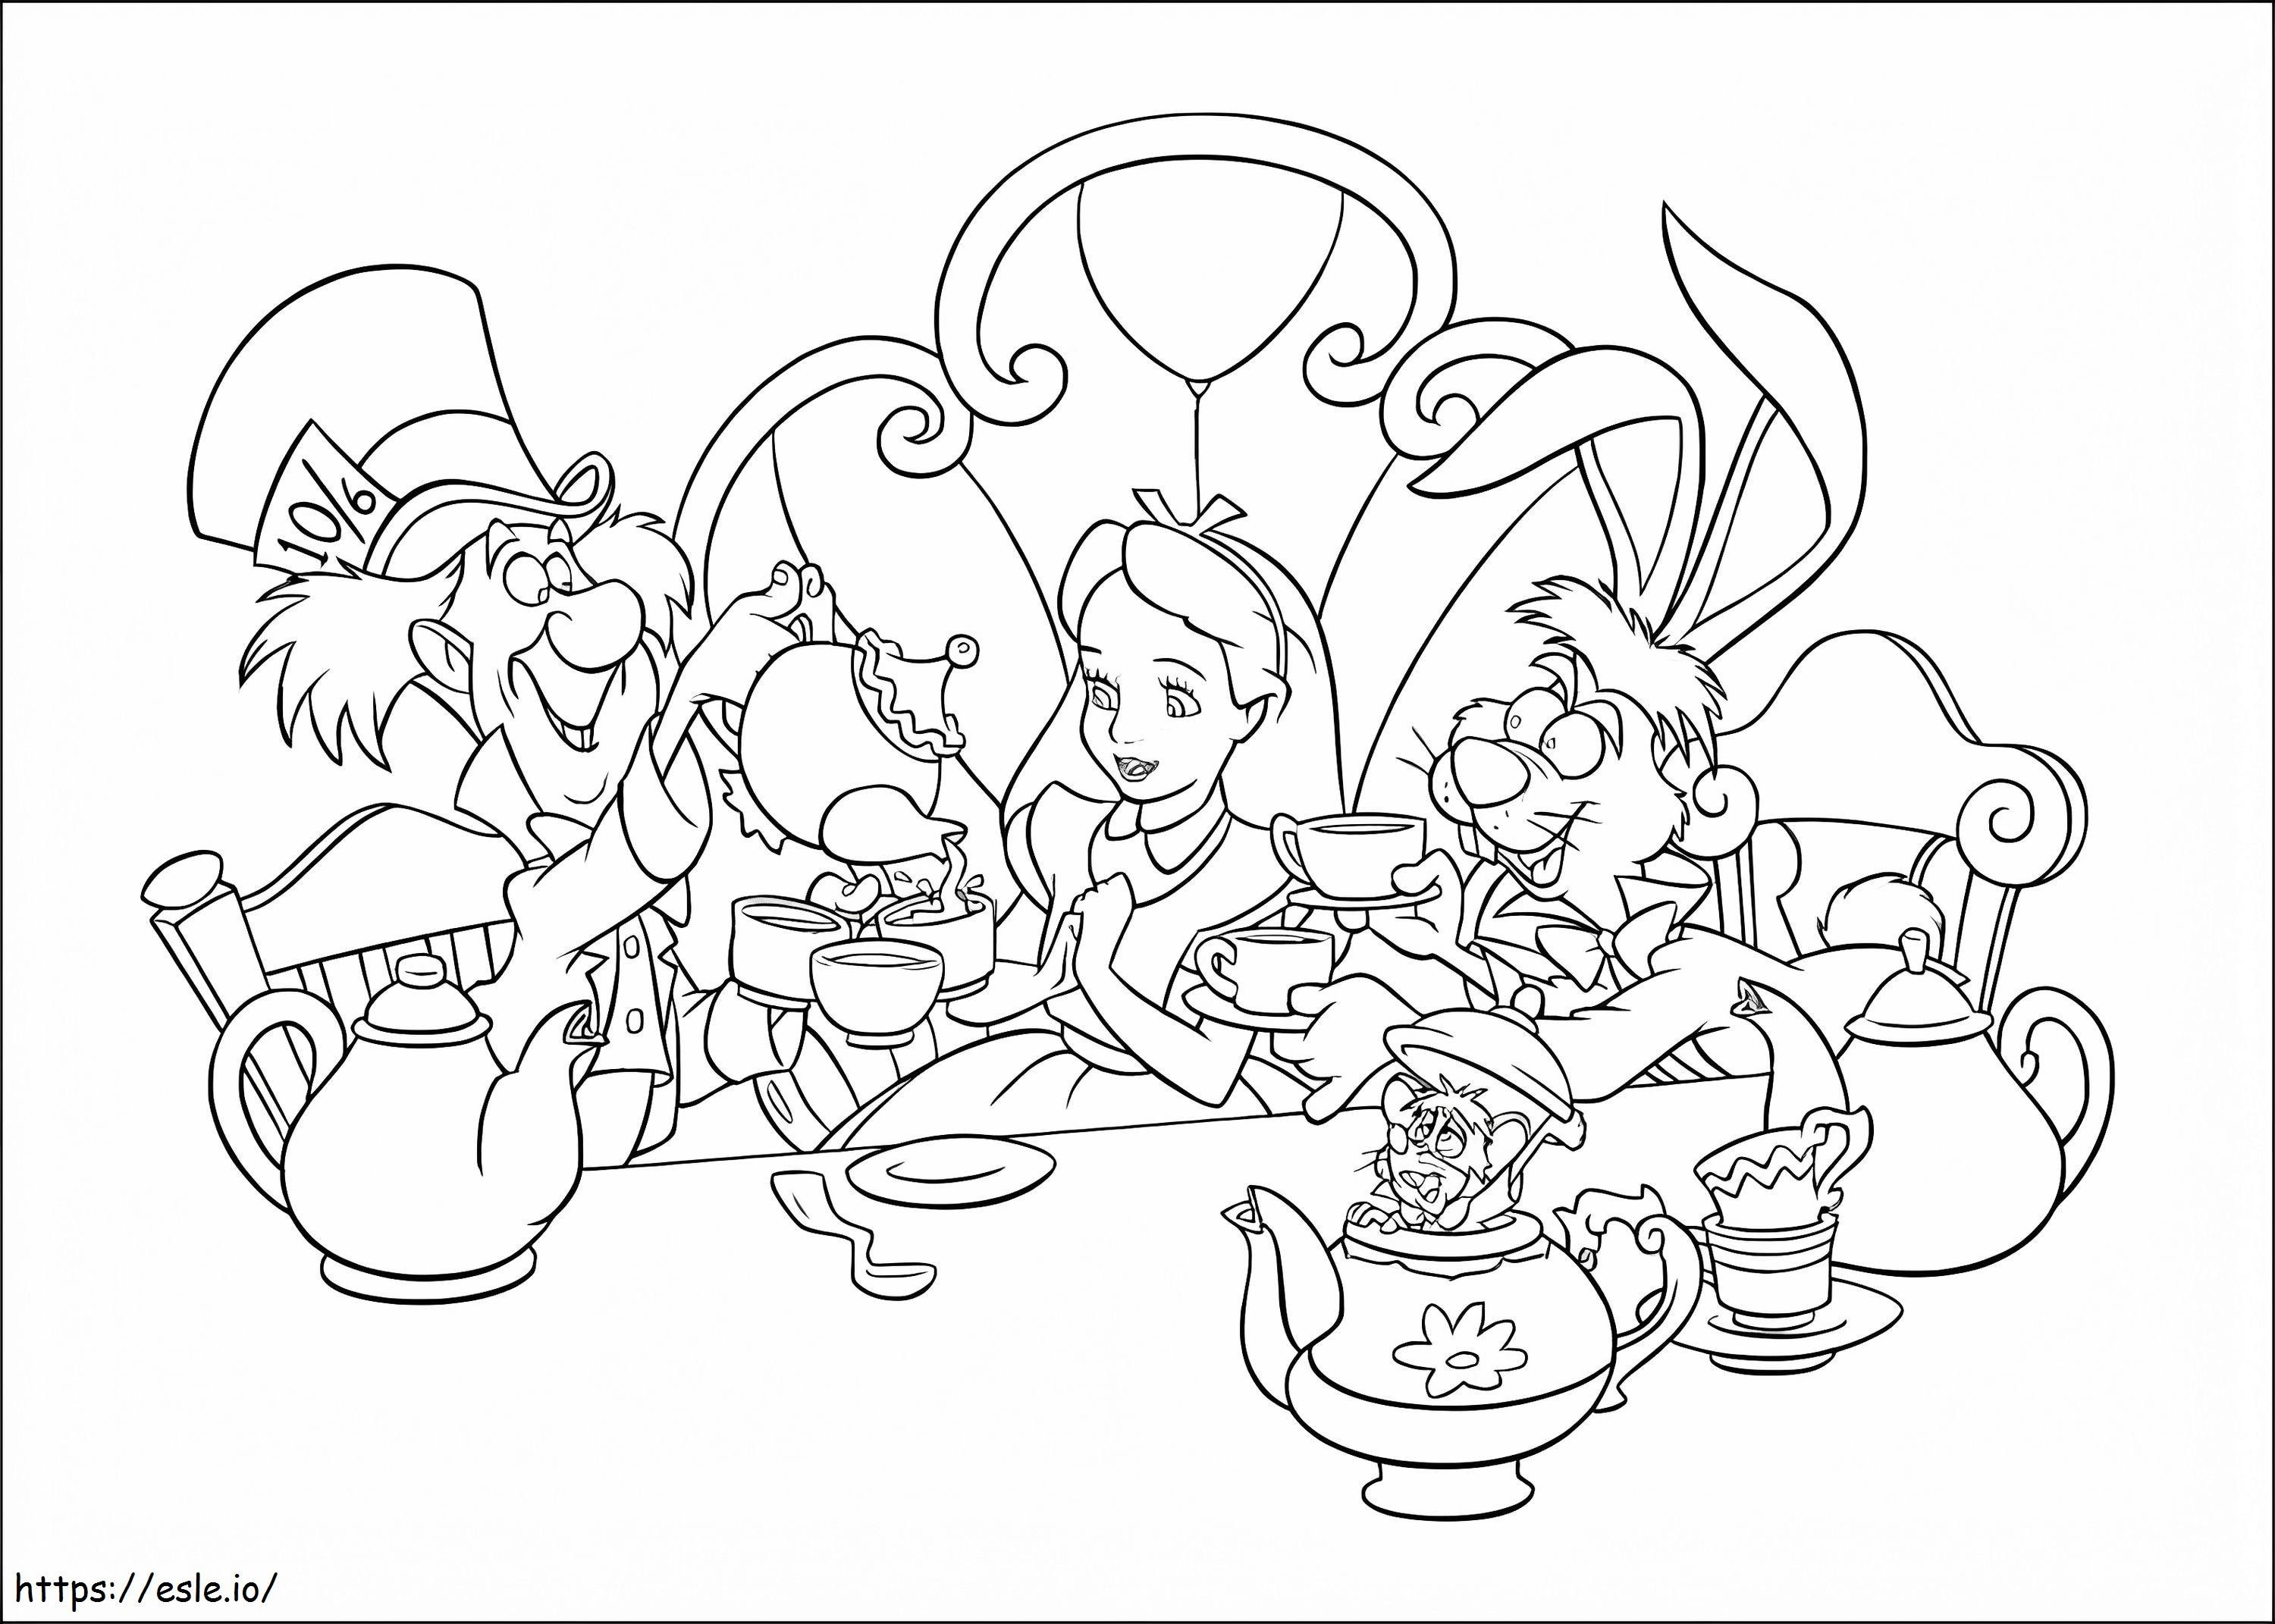 Print Alice In Wonderland coloring page